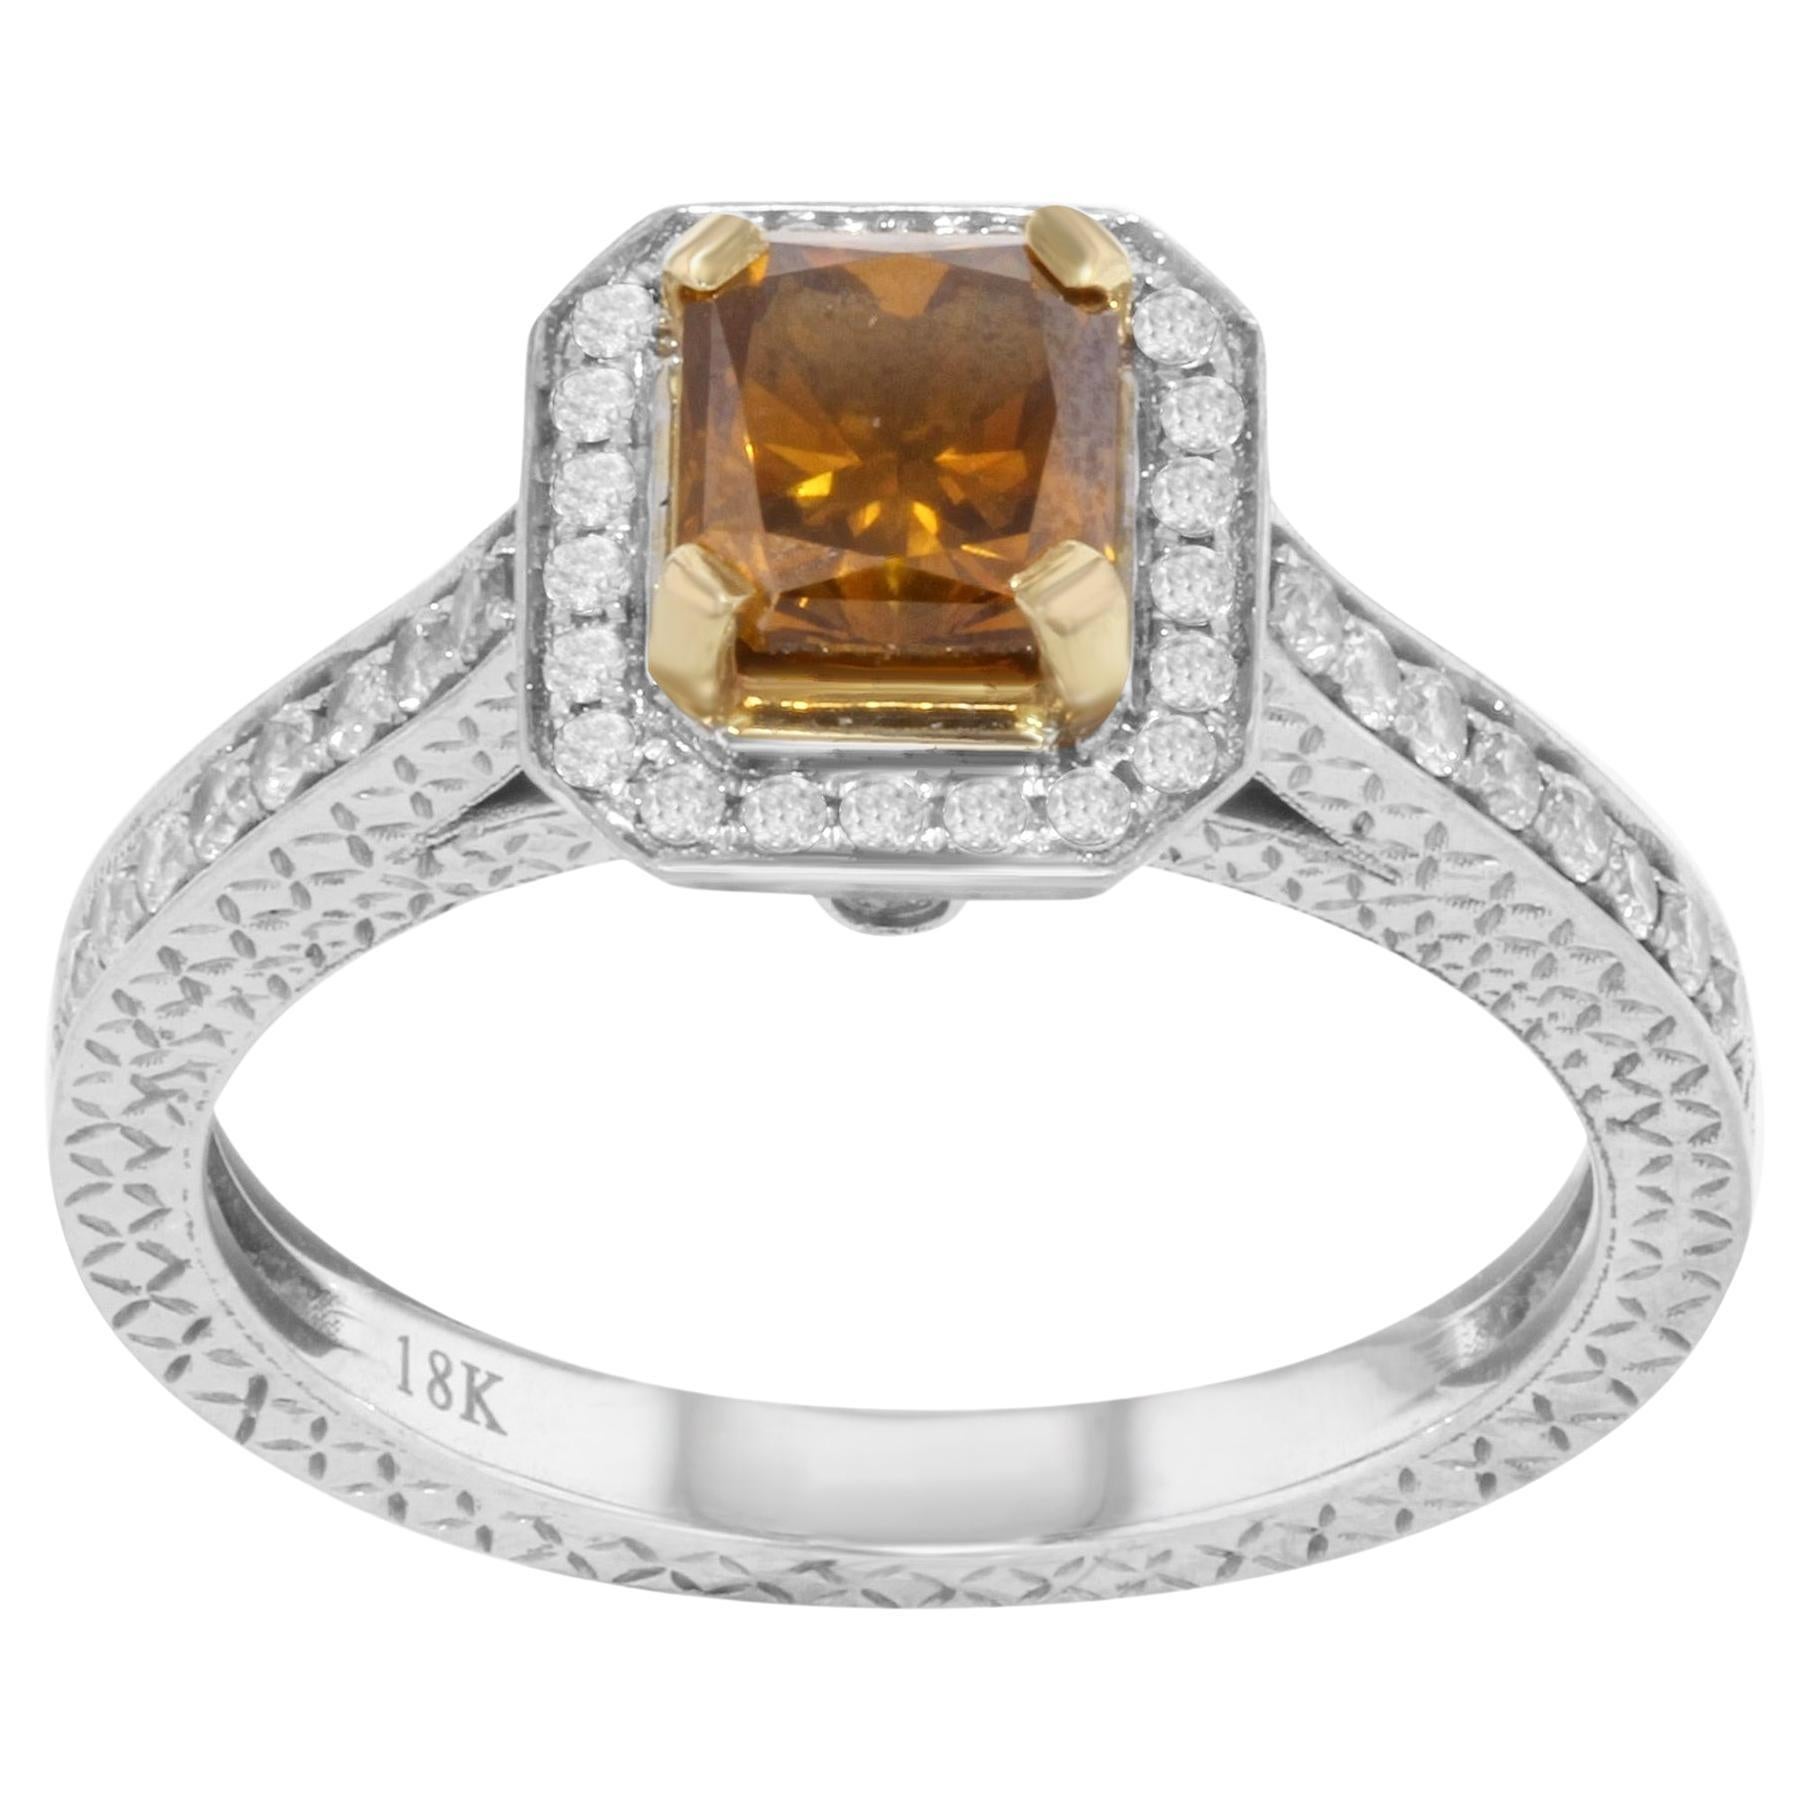 Rachel Koen Diamond Engagement Ring 18K White and Yellow Gold 1.50 Cttw For Sale